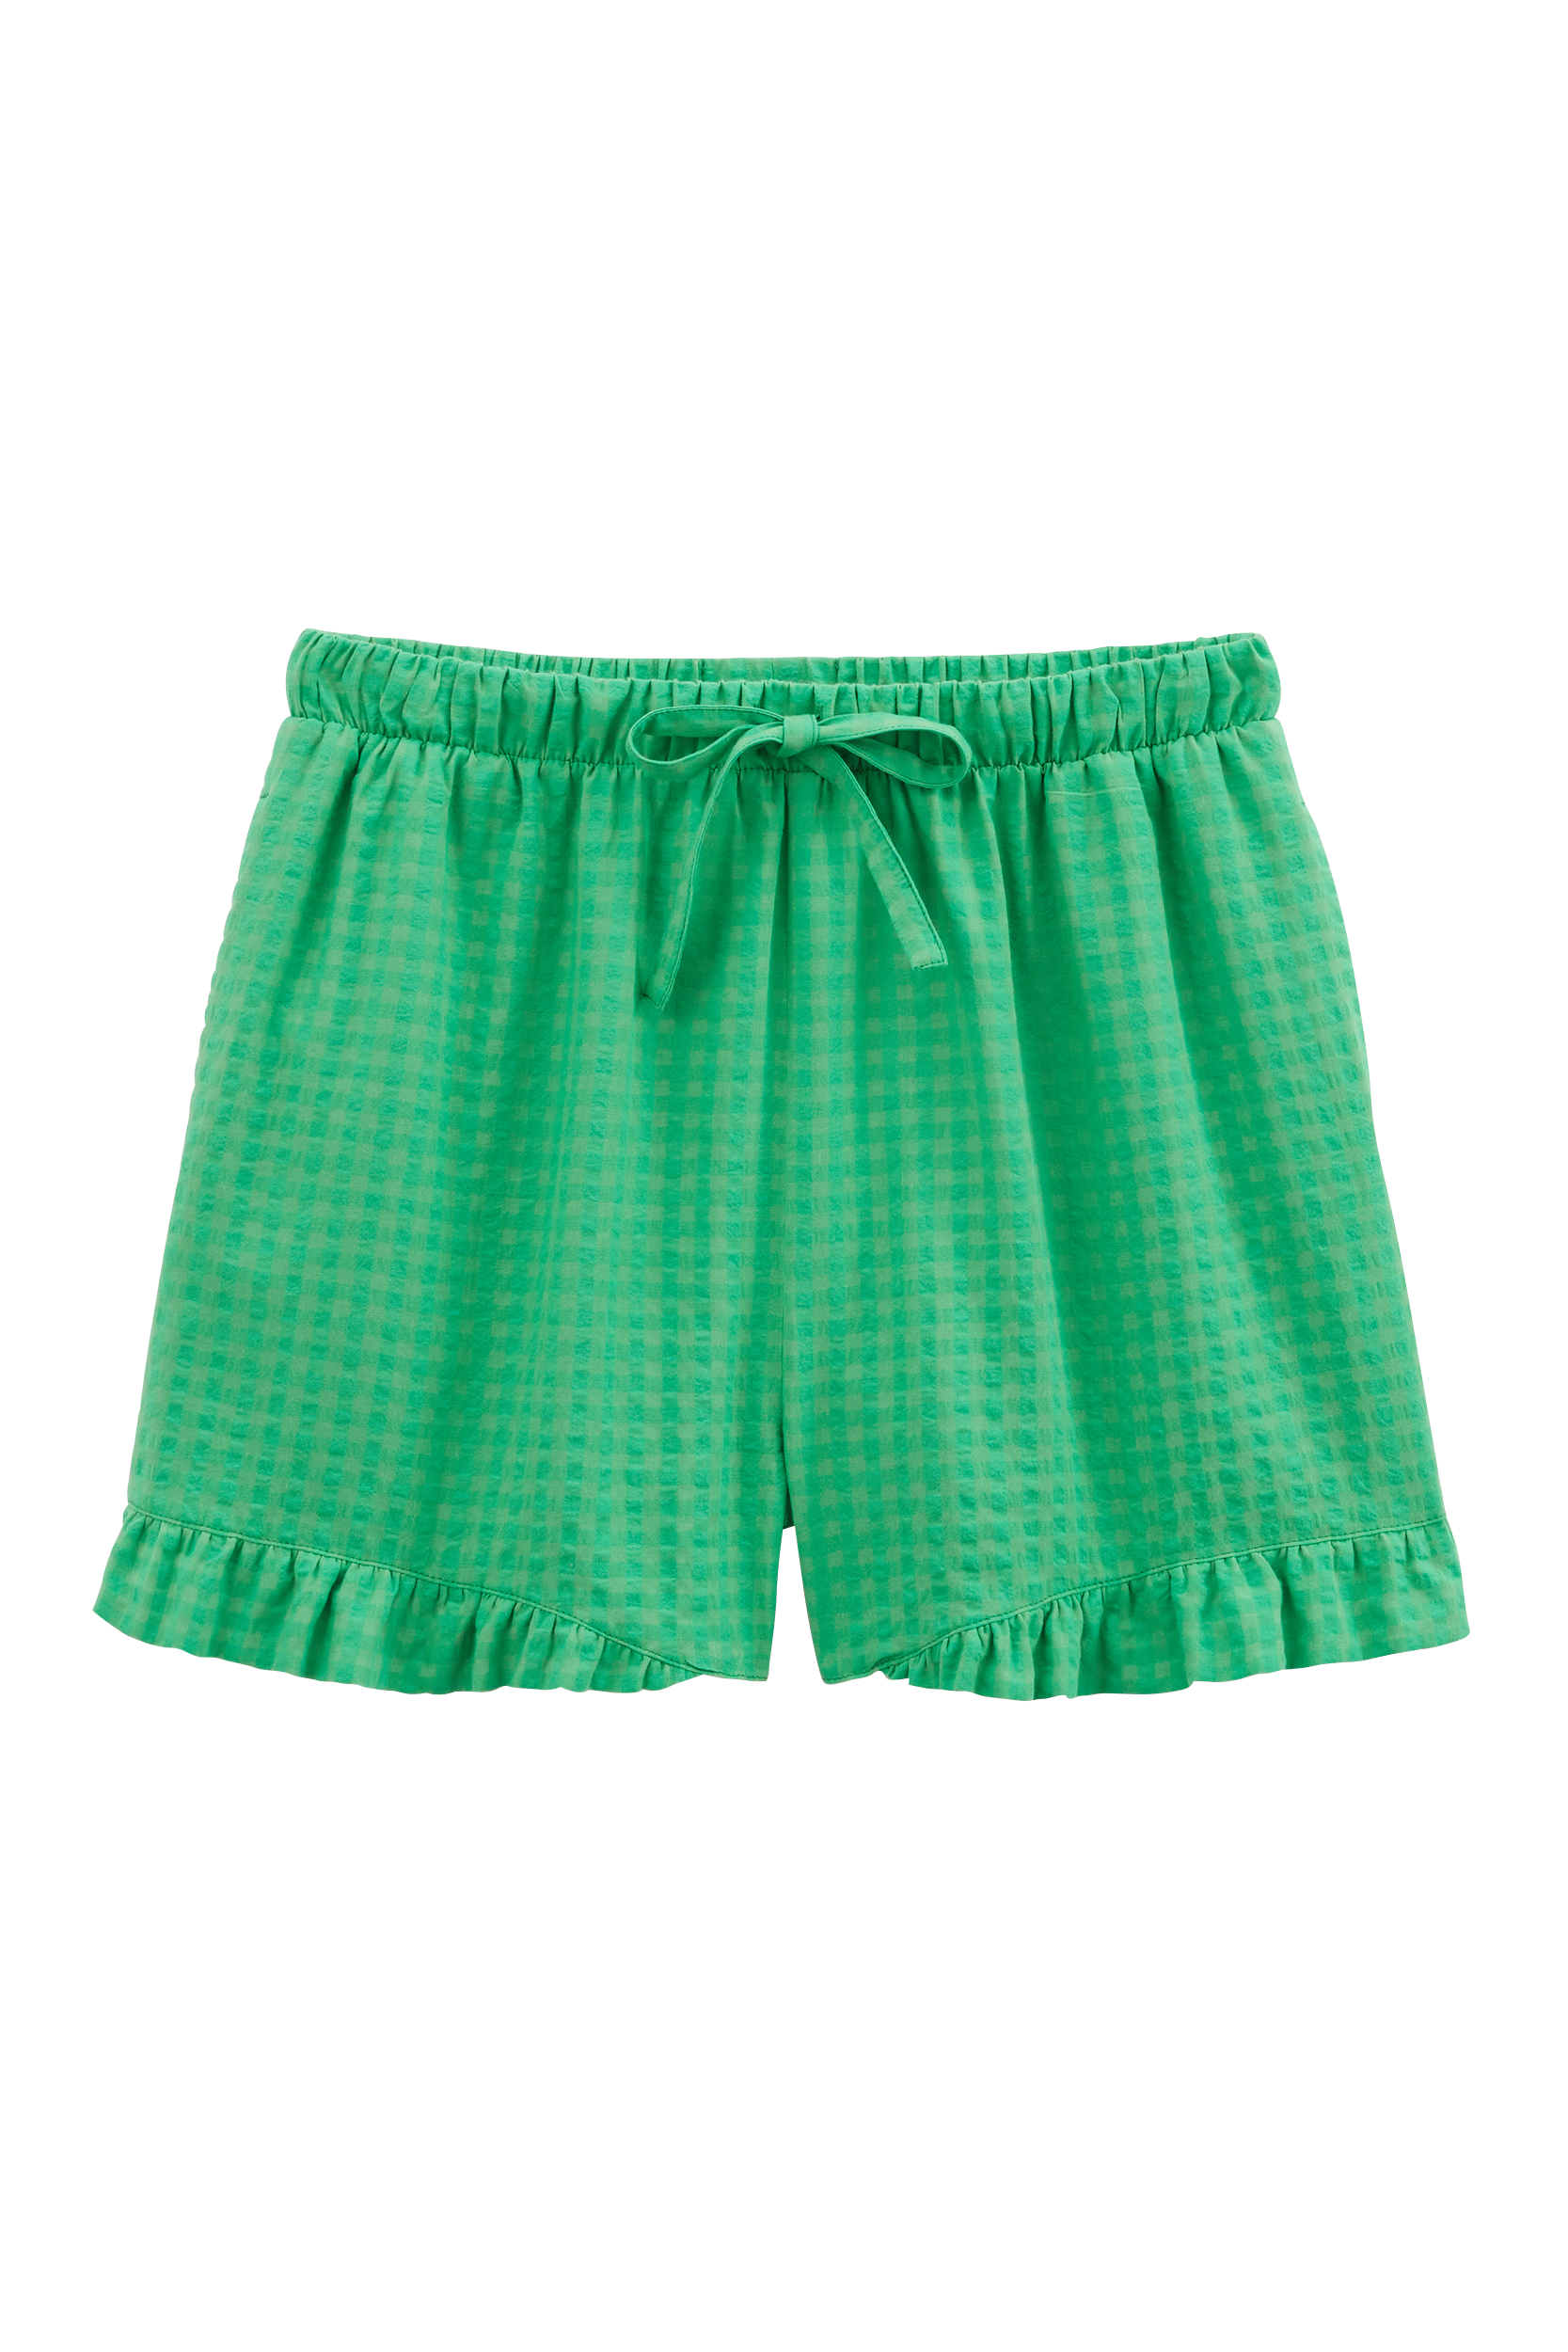 Lawn green gingham Velouté shorts